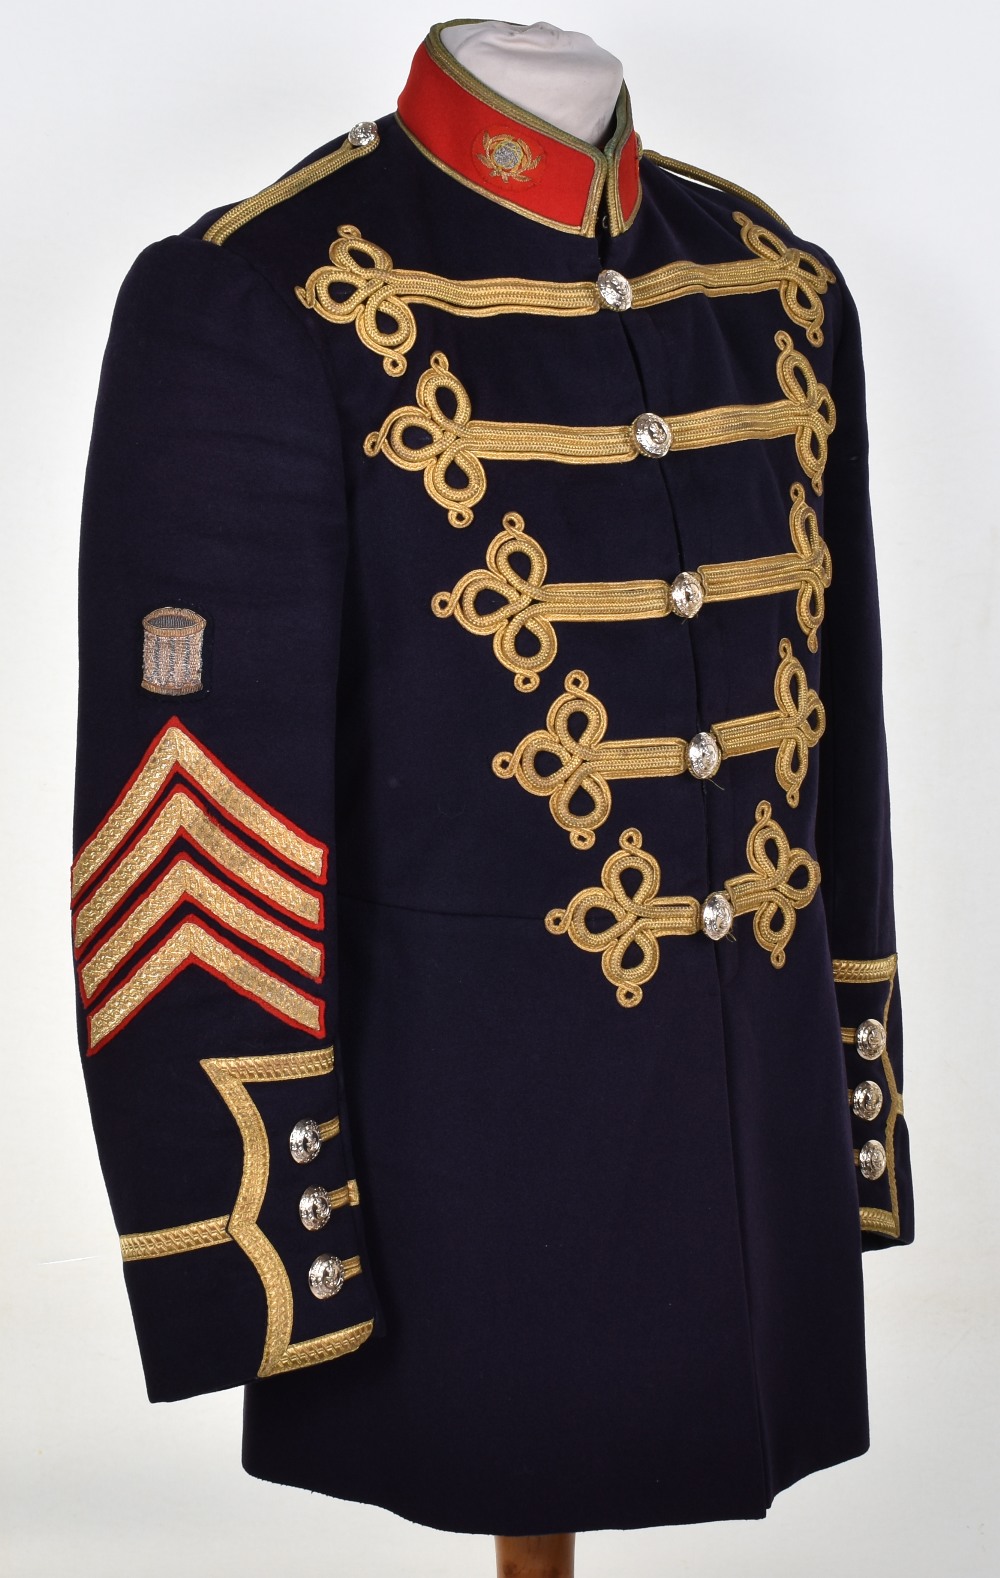 EIIR Portsmouth Band Royal Marines Drum Majors Full Dress Tunic and Peaked Cap - Image 5 of 11